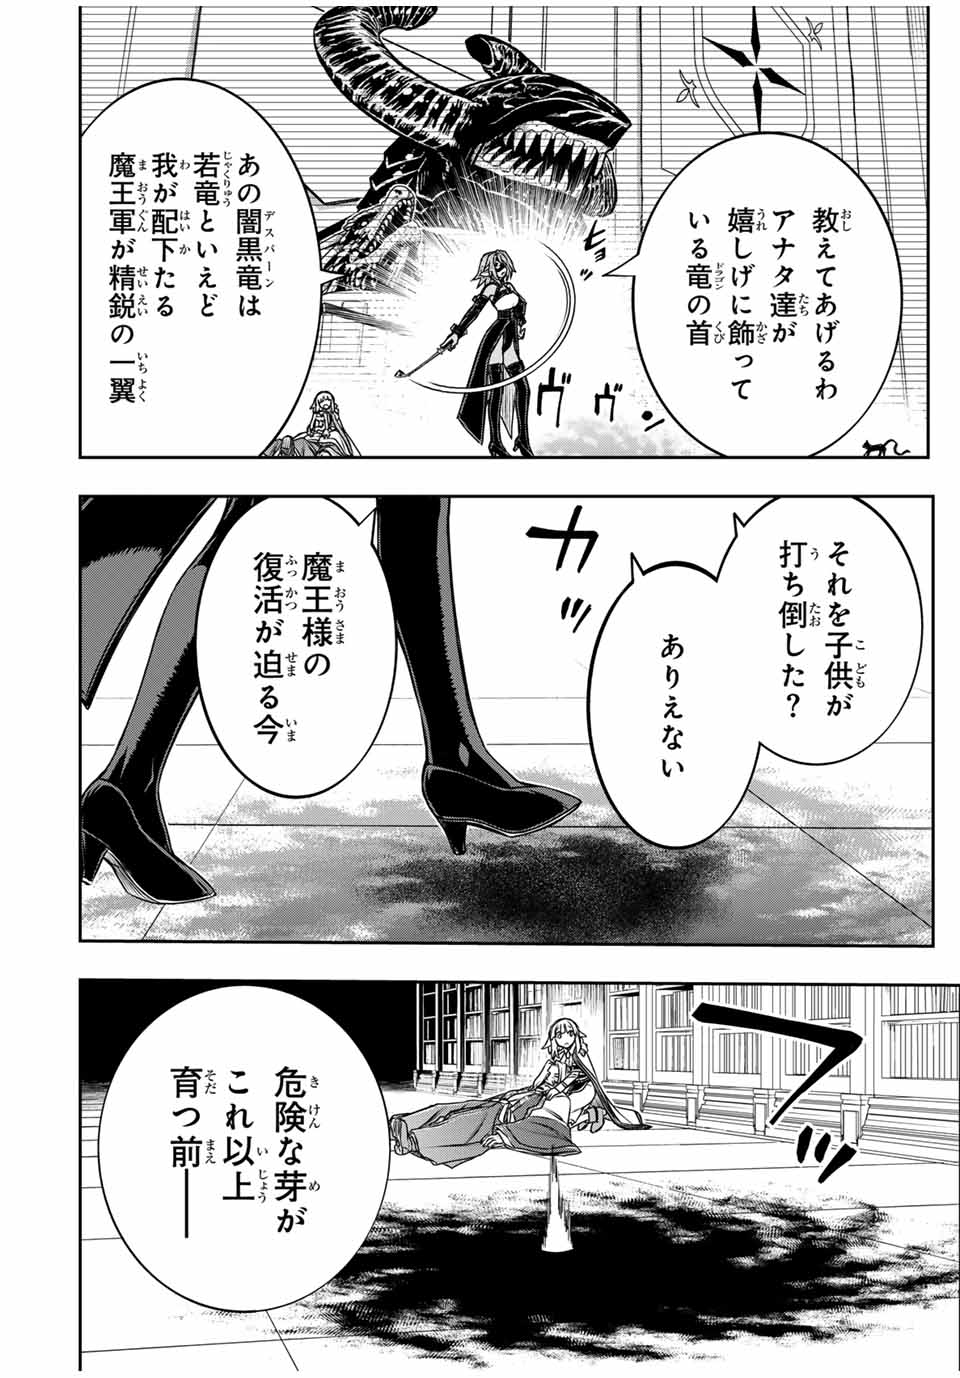 Nengan no Akuyaku Reijou (Last Boss) no Karada wo Teniiretazo!  - Chapter 25 - Page 14